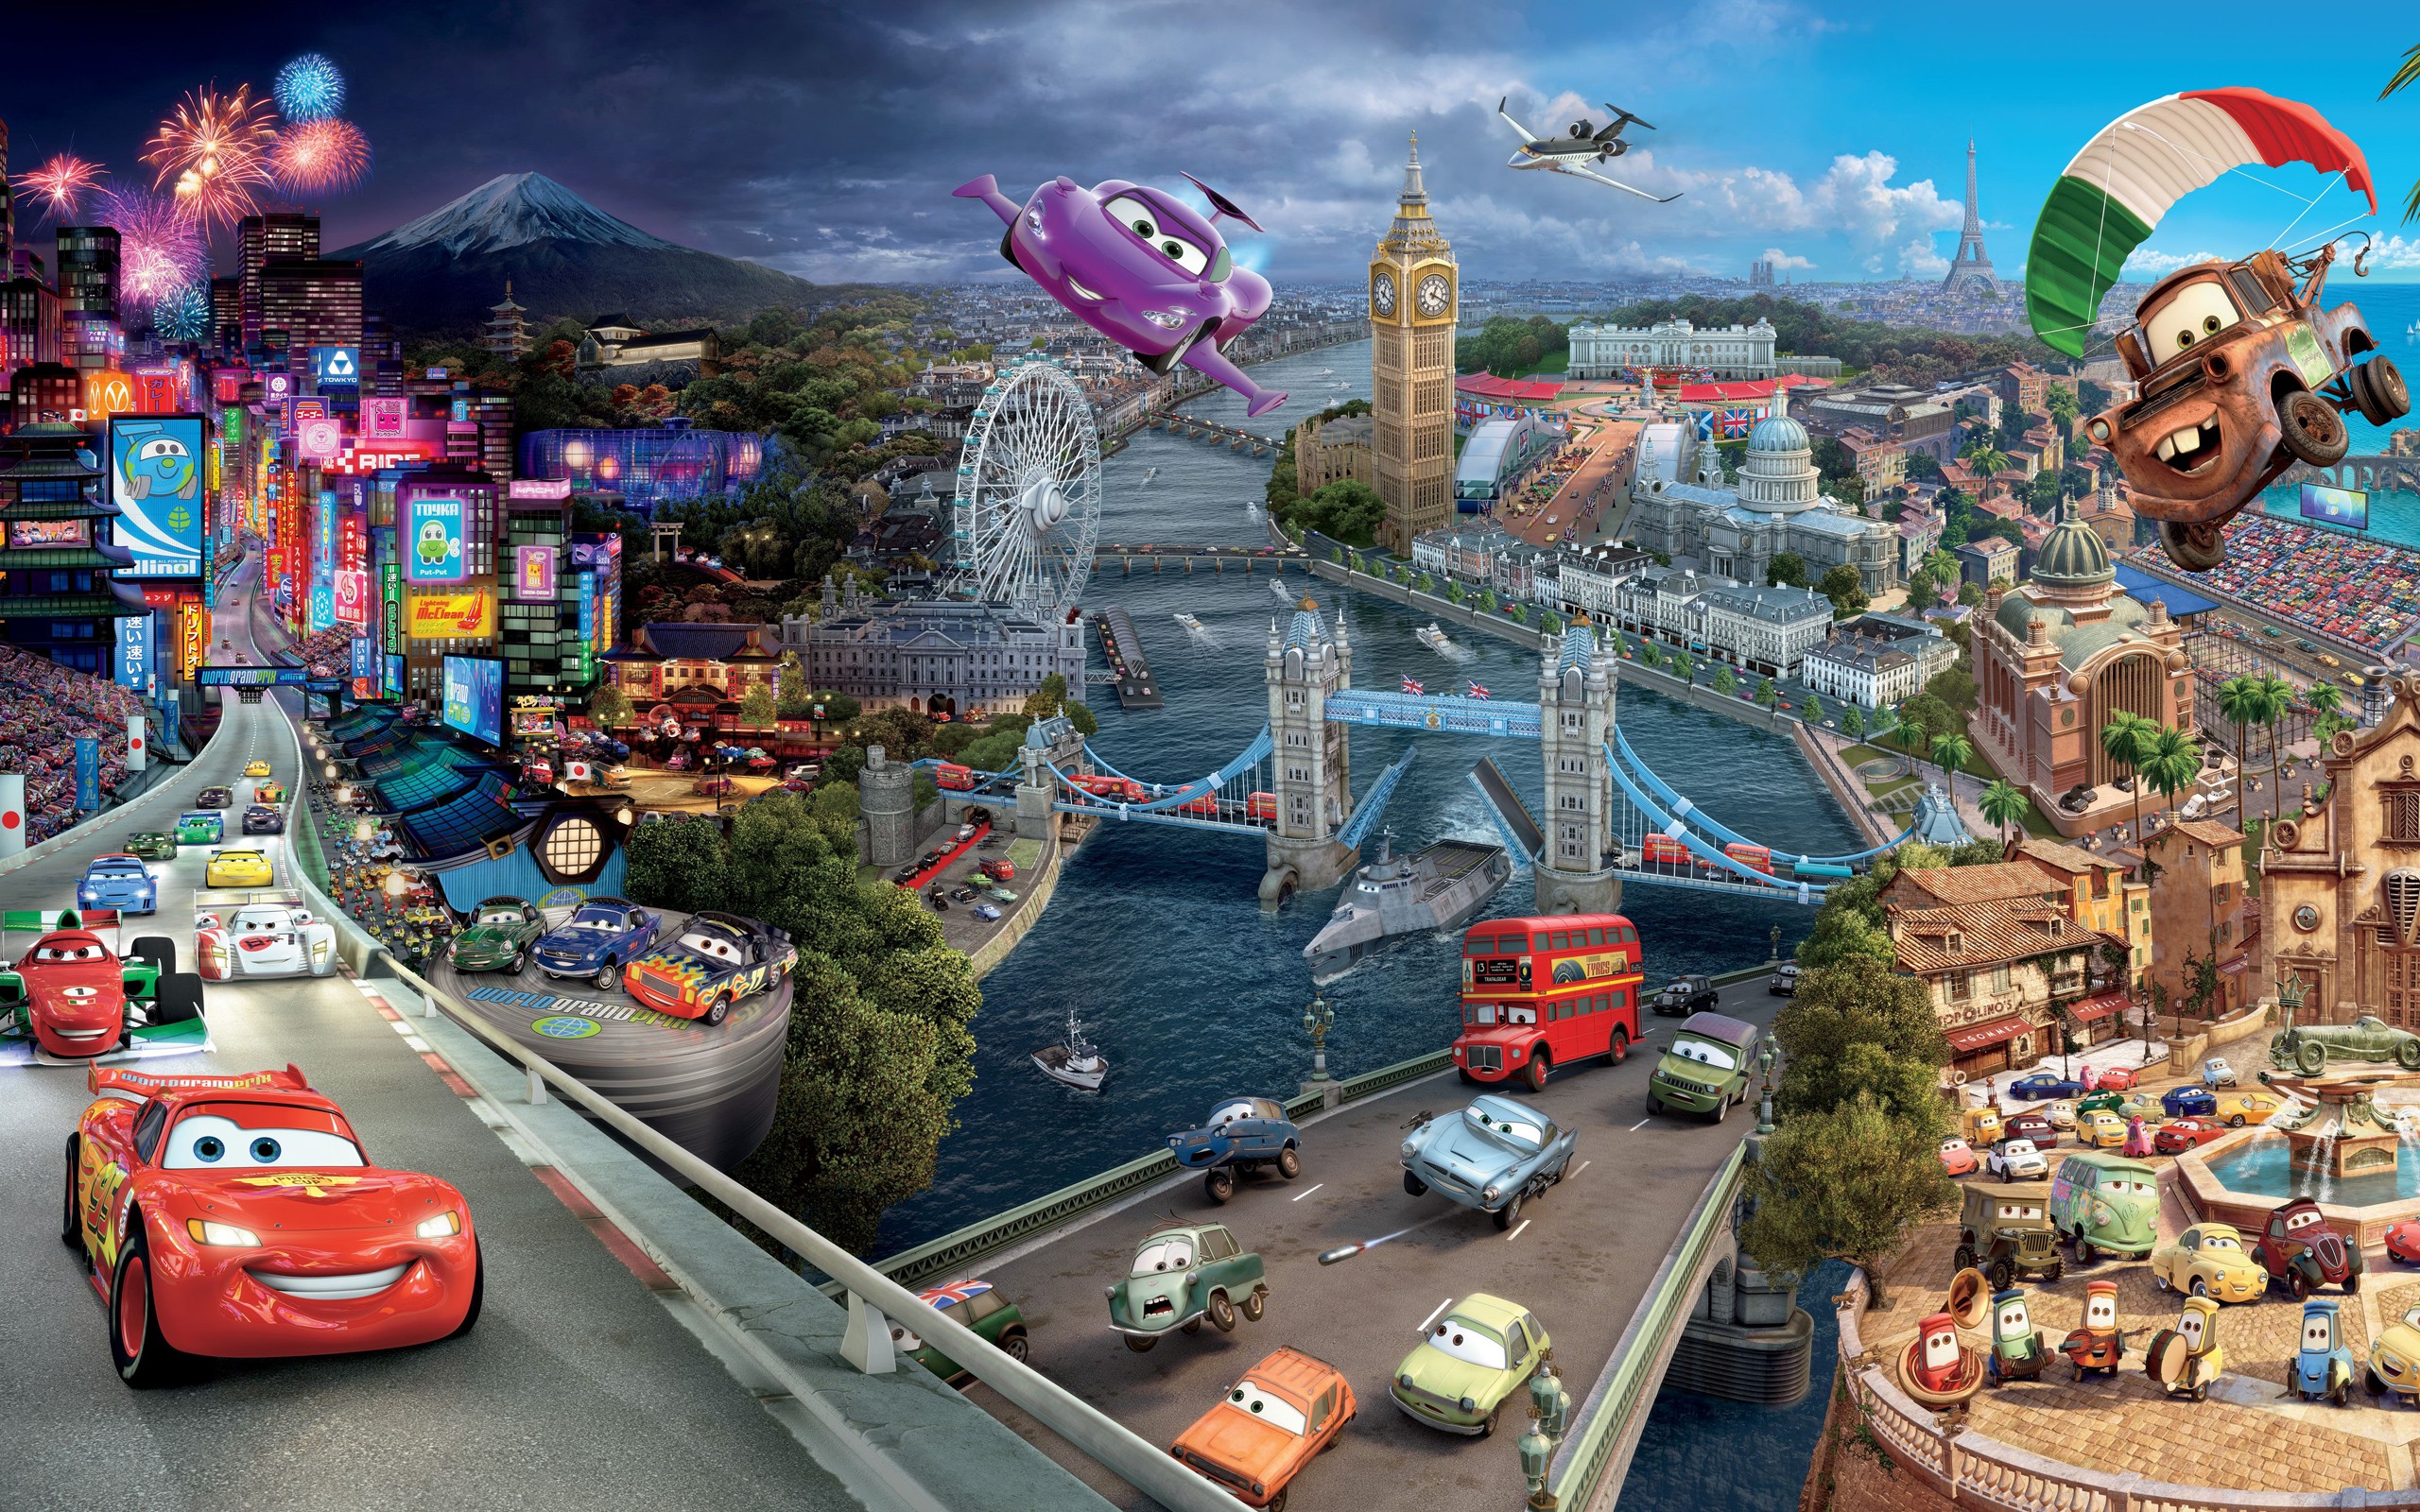 General 2560x1600 car Cars (movie) Pixar Animation Studios animated movies Movie Vehicles vehicle movies